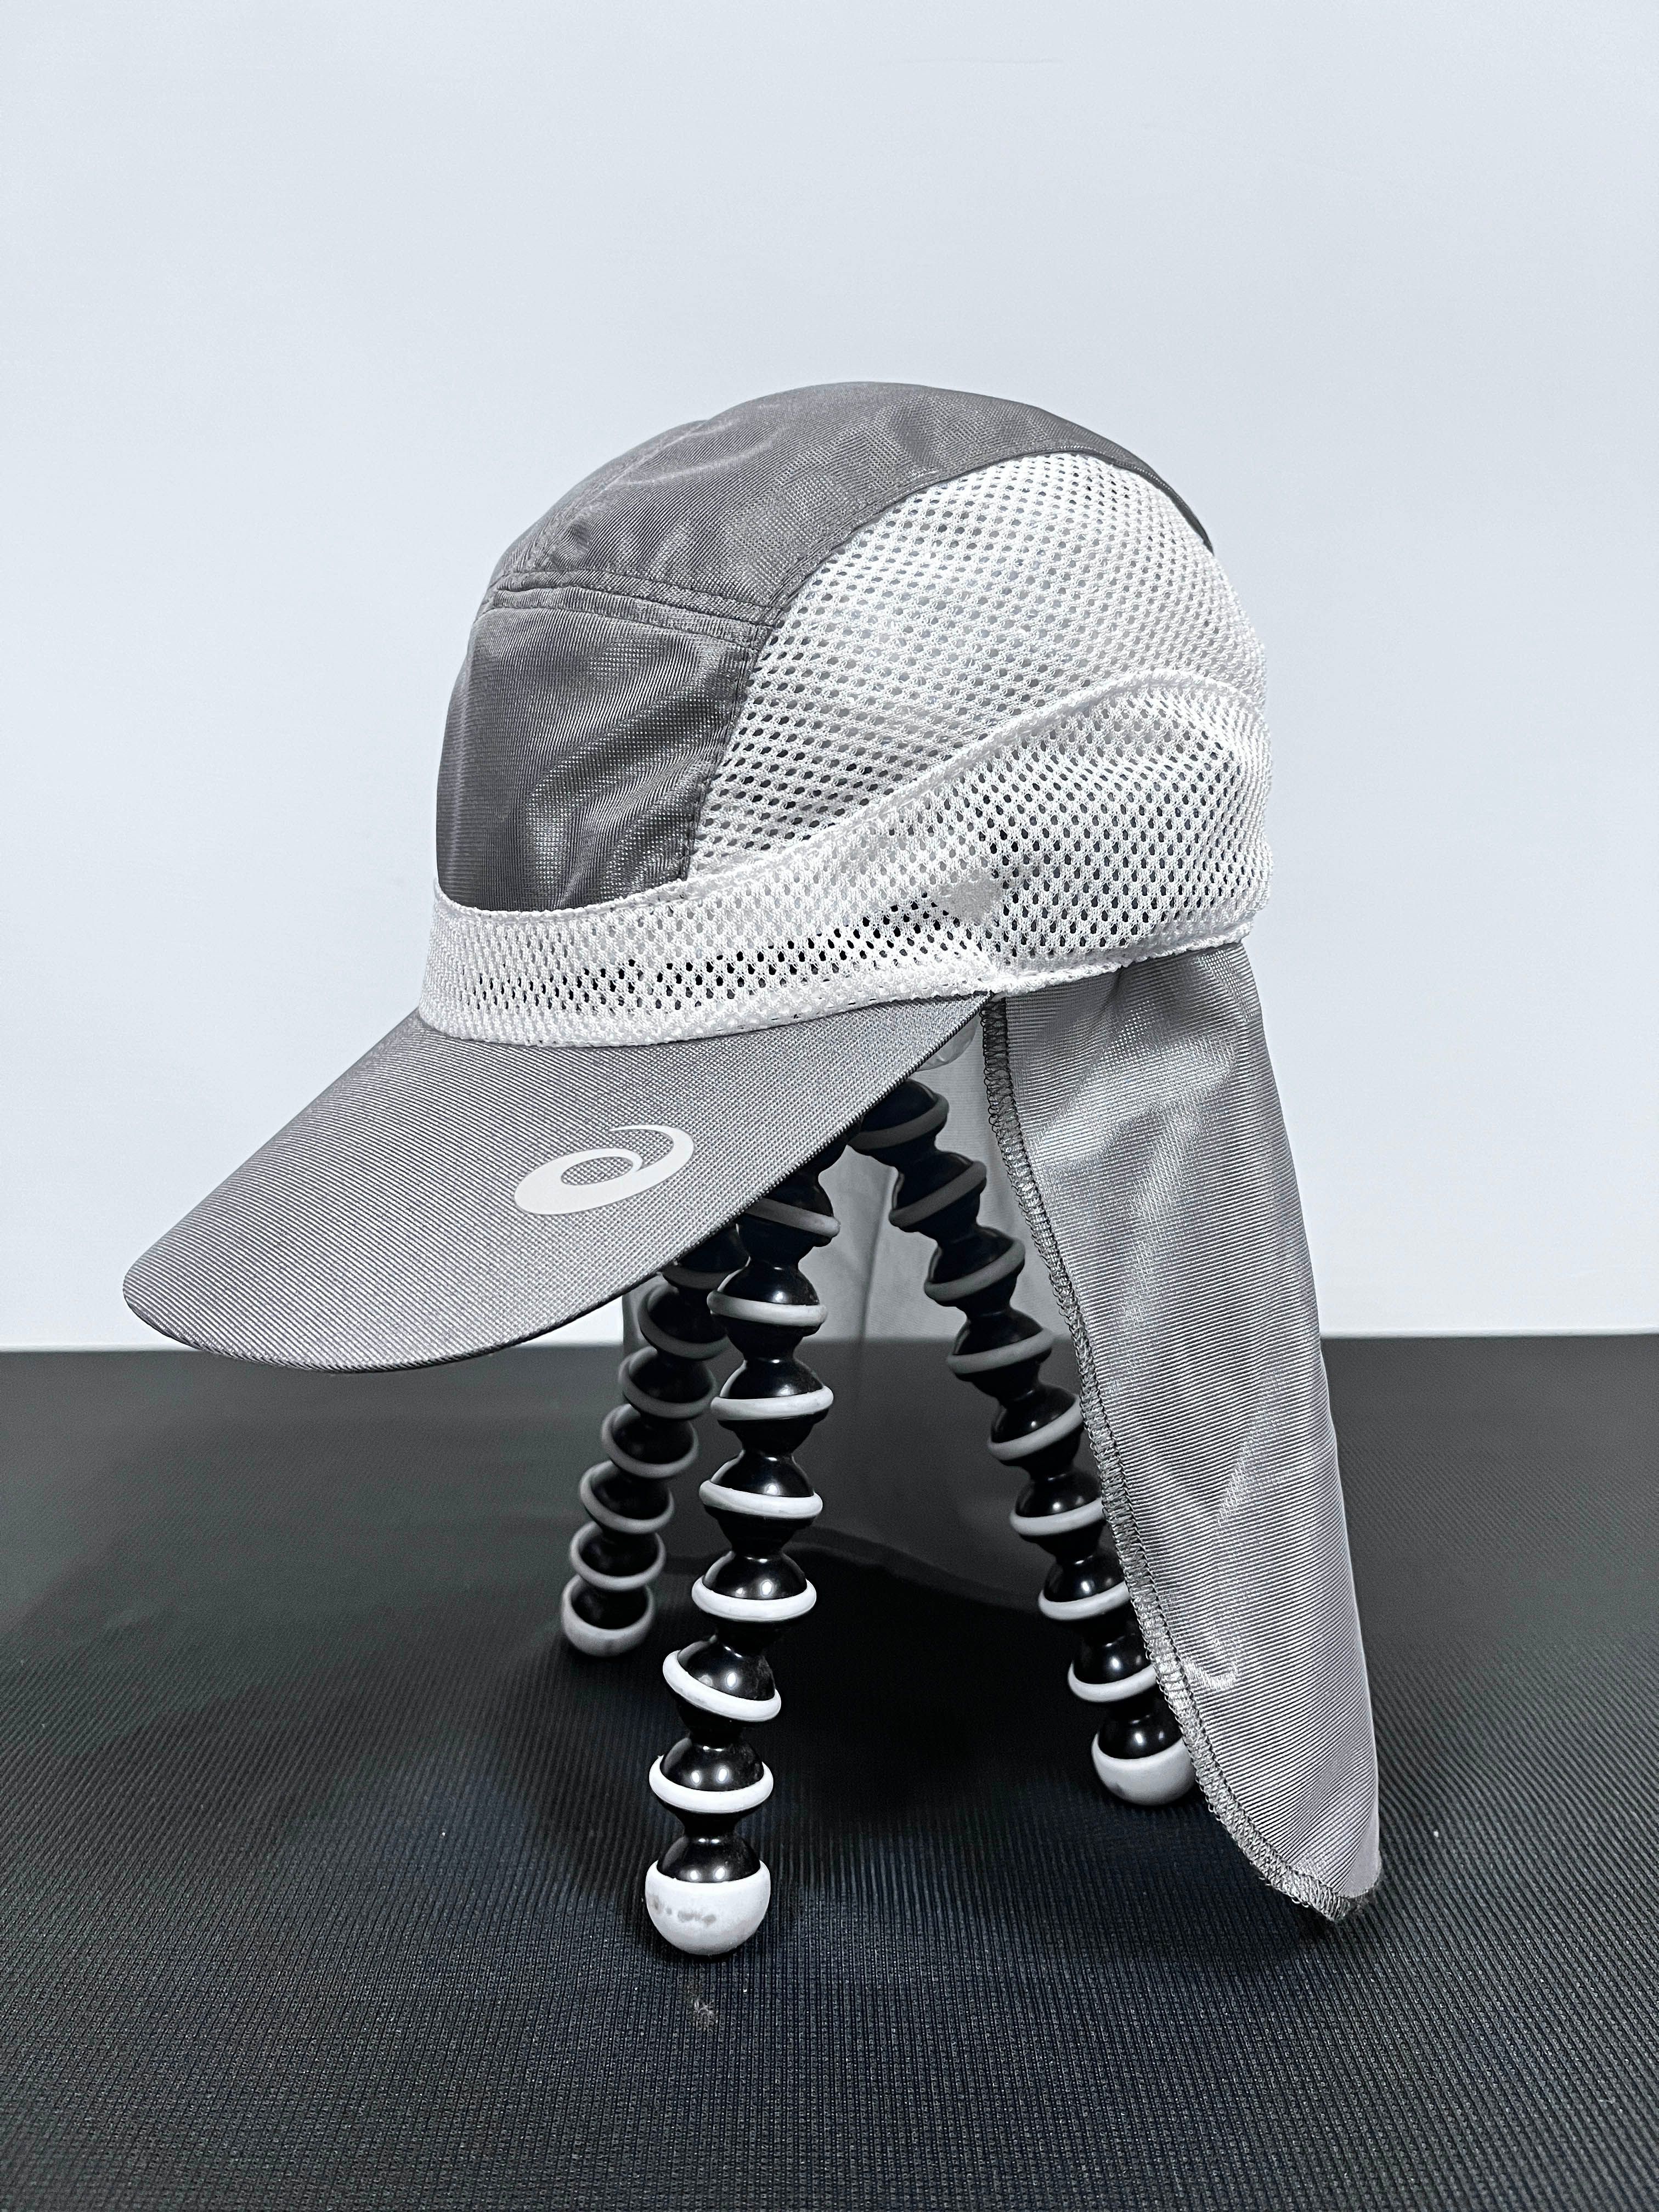 Asics Kiko Kostadinov asics style 2-way attachment cap hat | Grailed